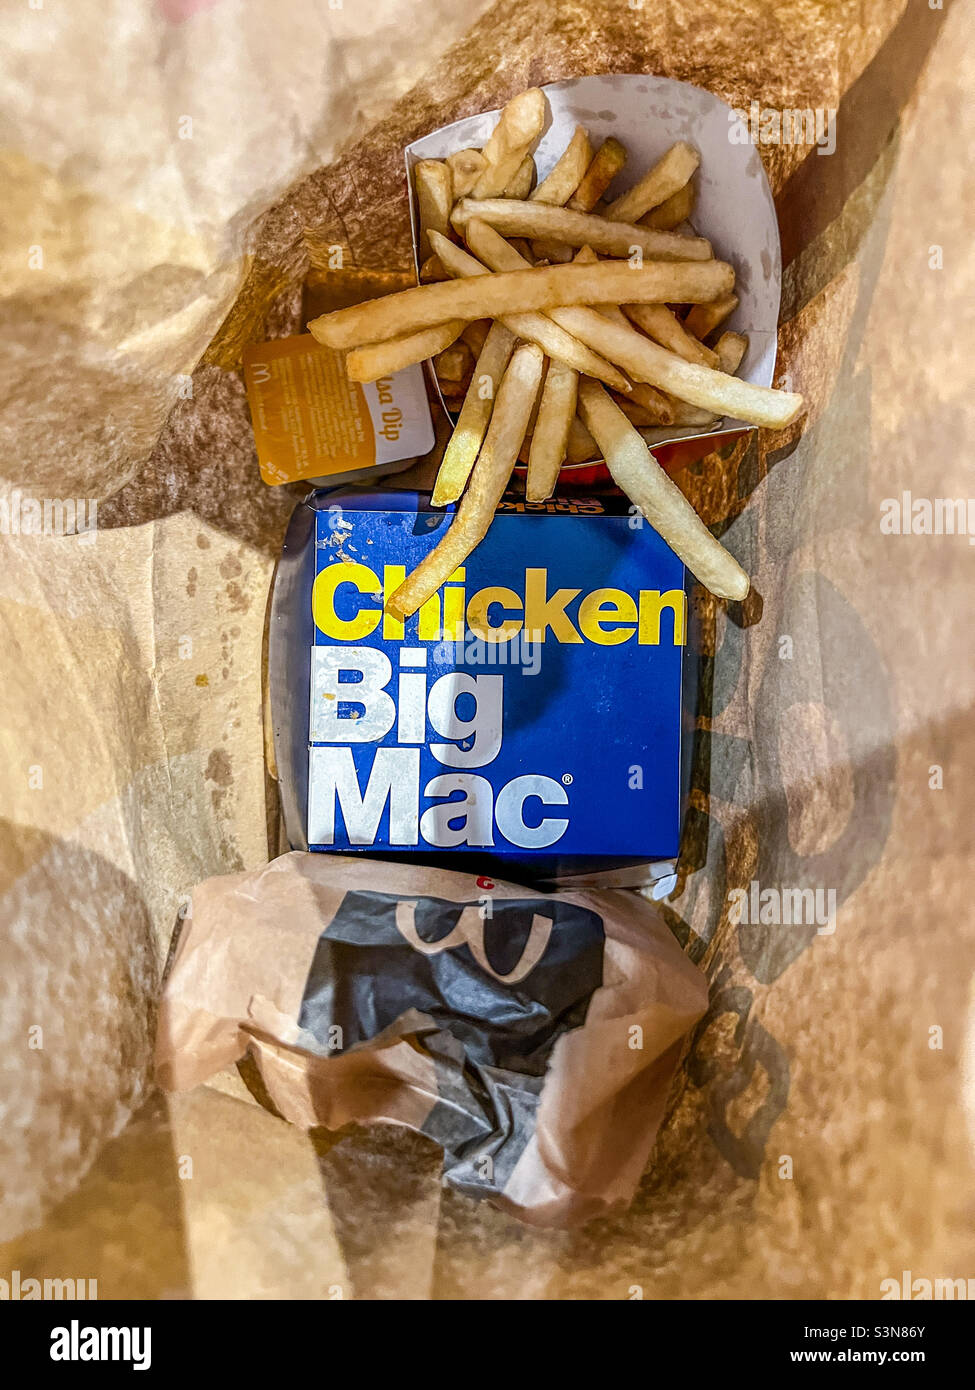 McDonald’s chicken Big Mac burger meal with fries Stock Photo